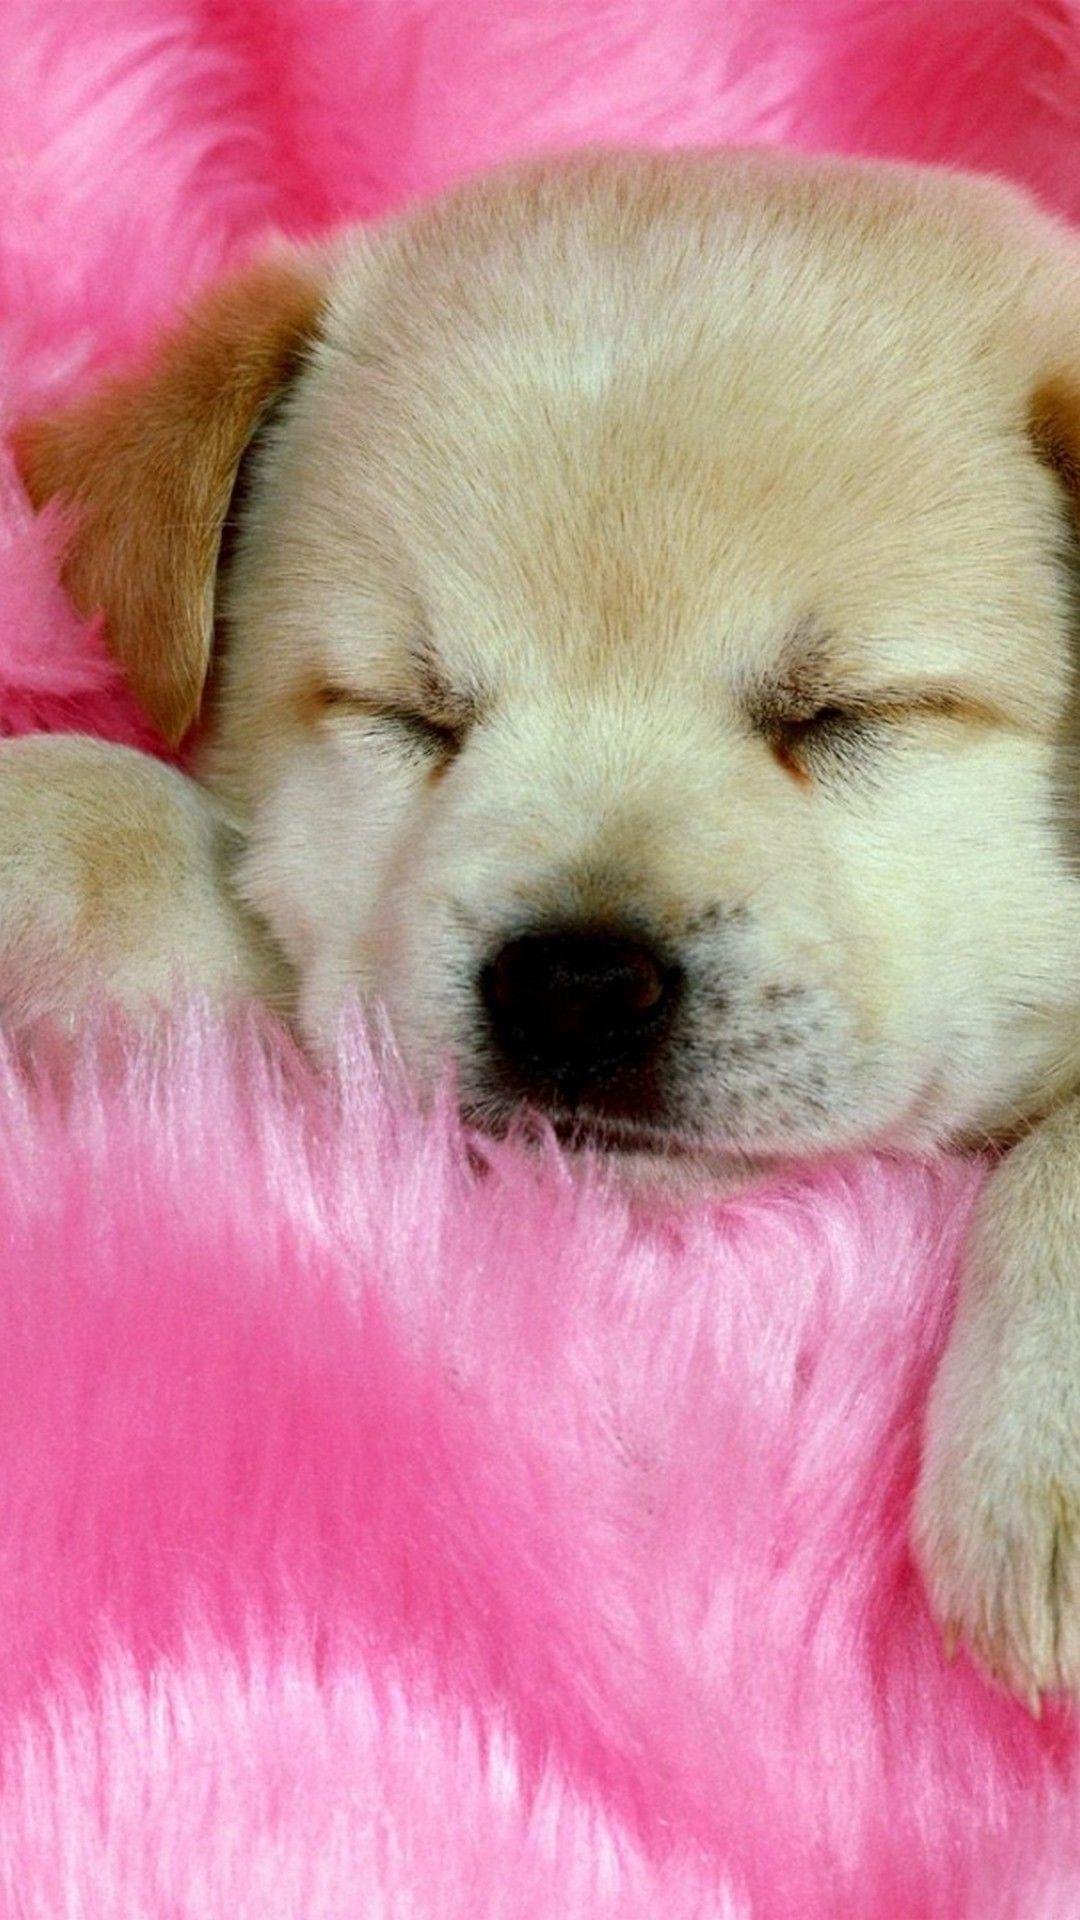 Cute Puppy Sleeping Wallpaper Download